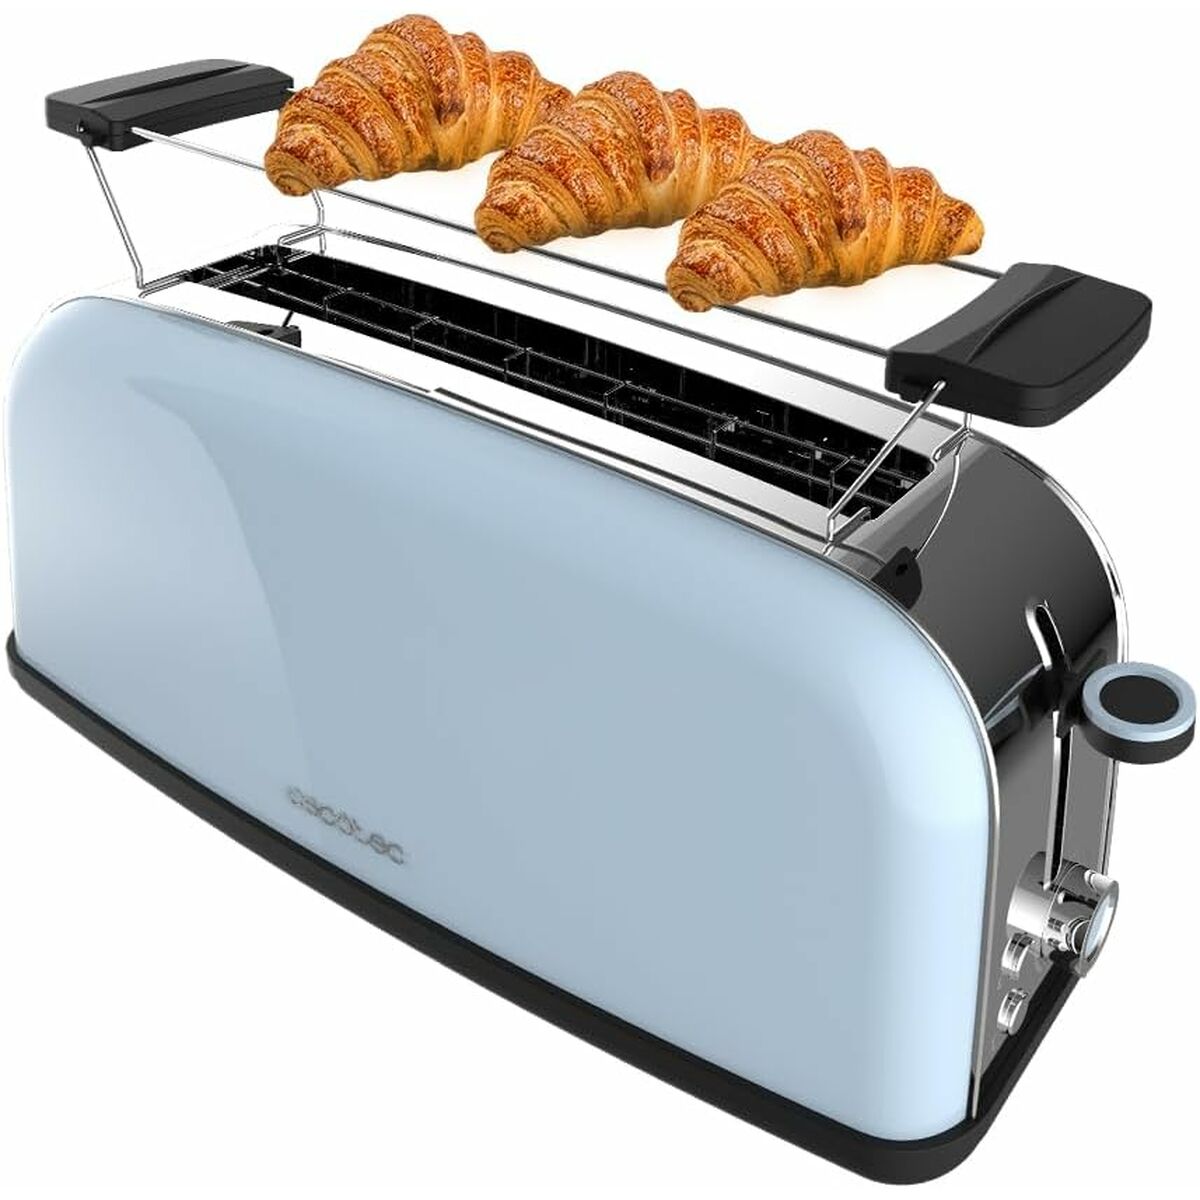 Toaster Cecotec Toastin' time 850 Long 850 W - CA International  